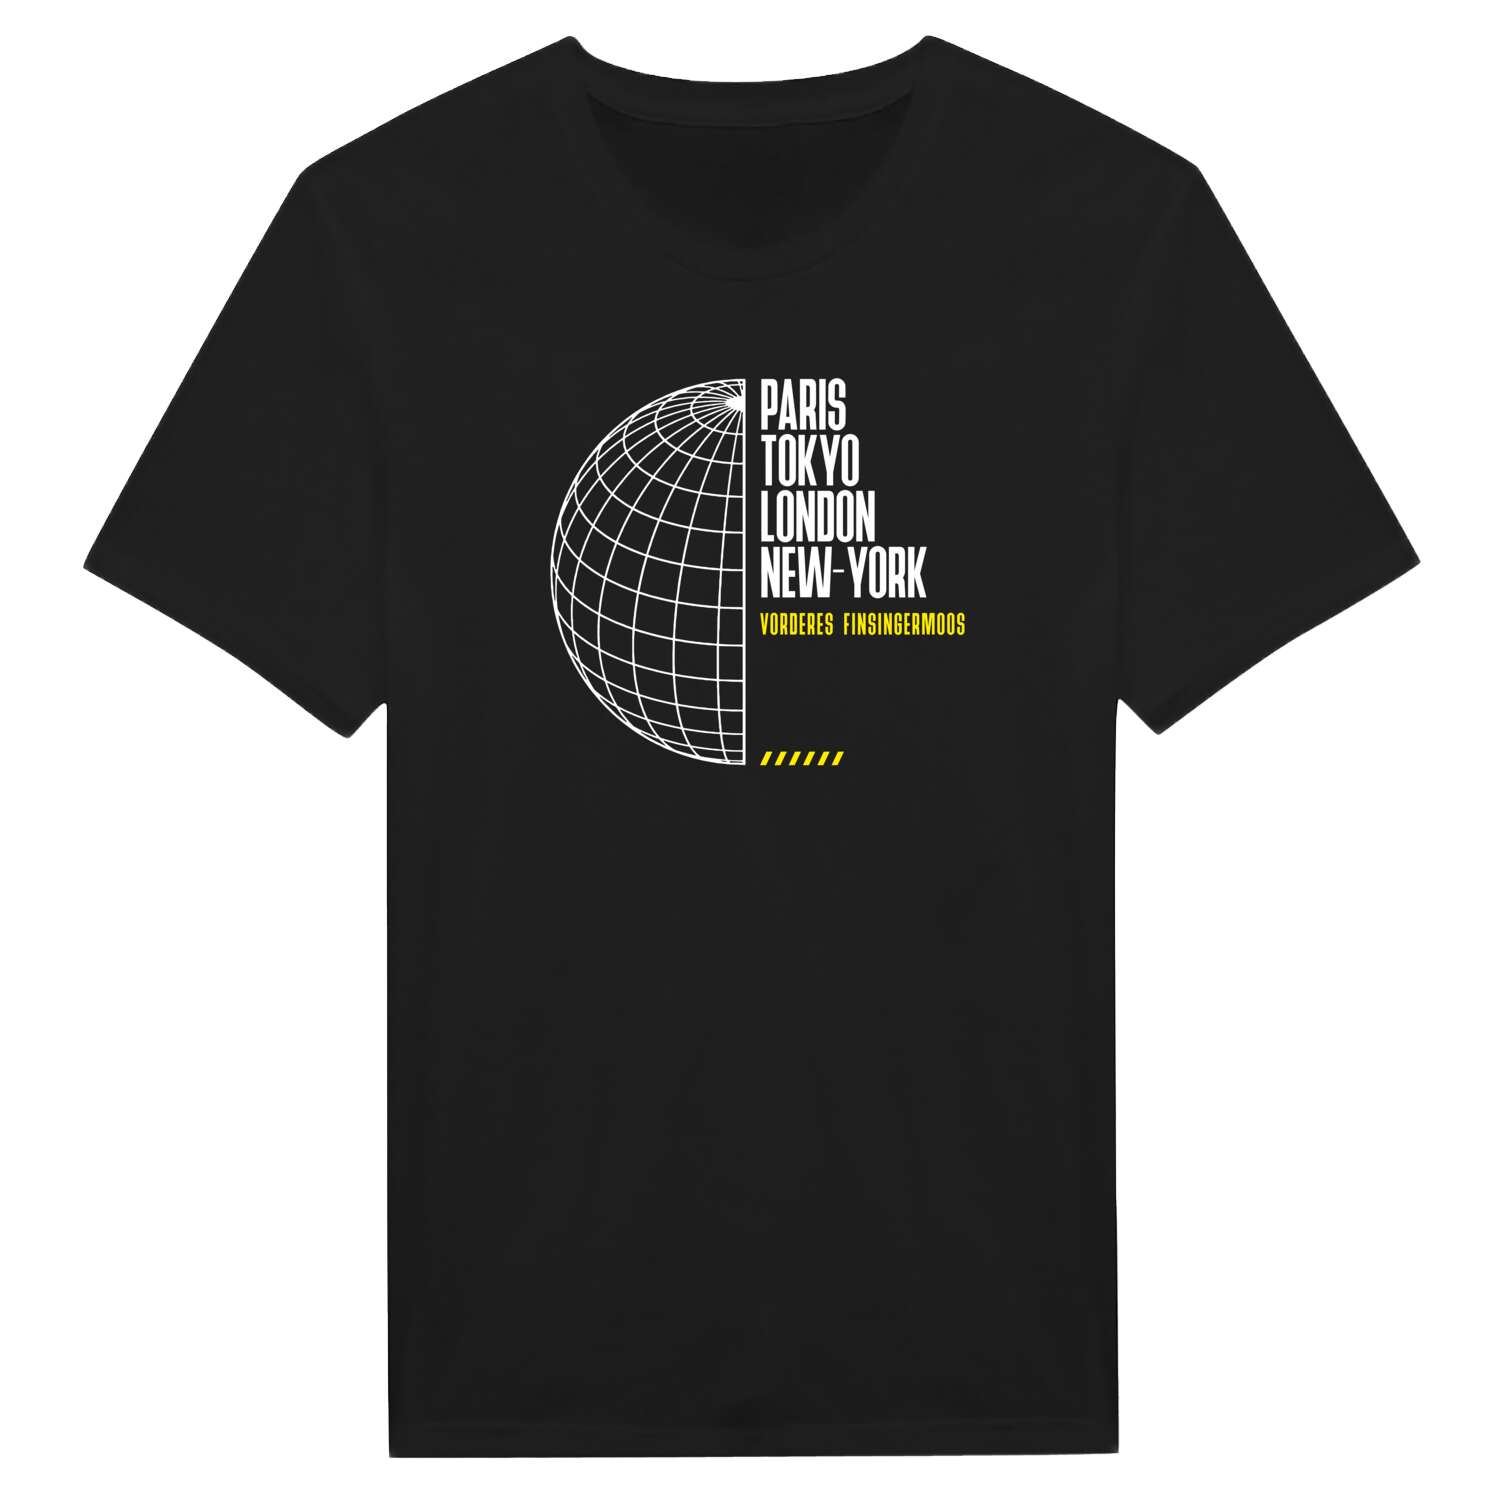 Vorderes Finsingermoos T-Shirt »Paris Tokyo London«